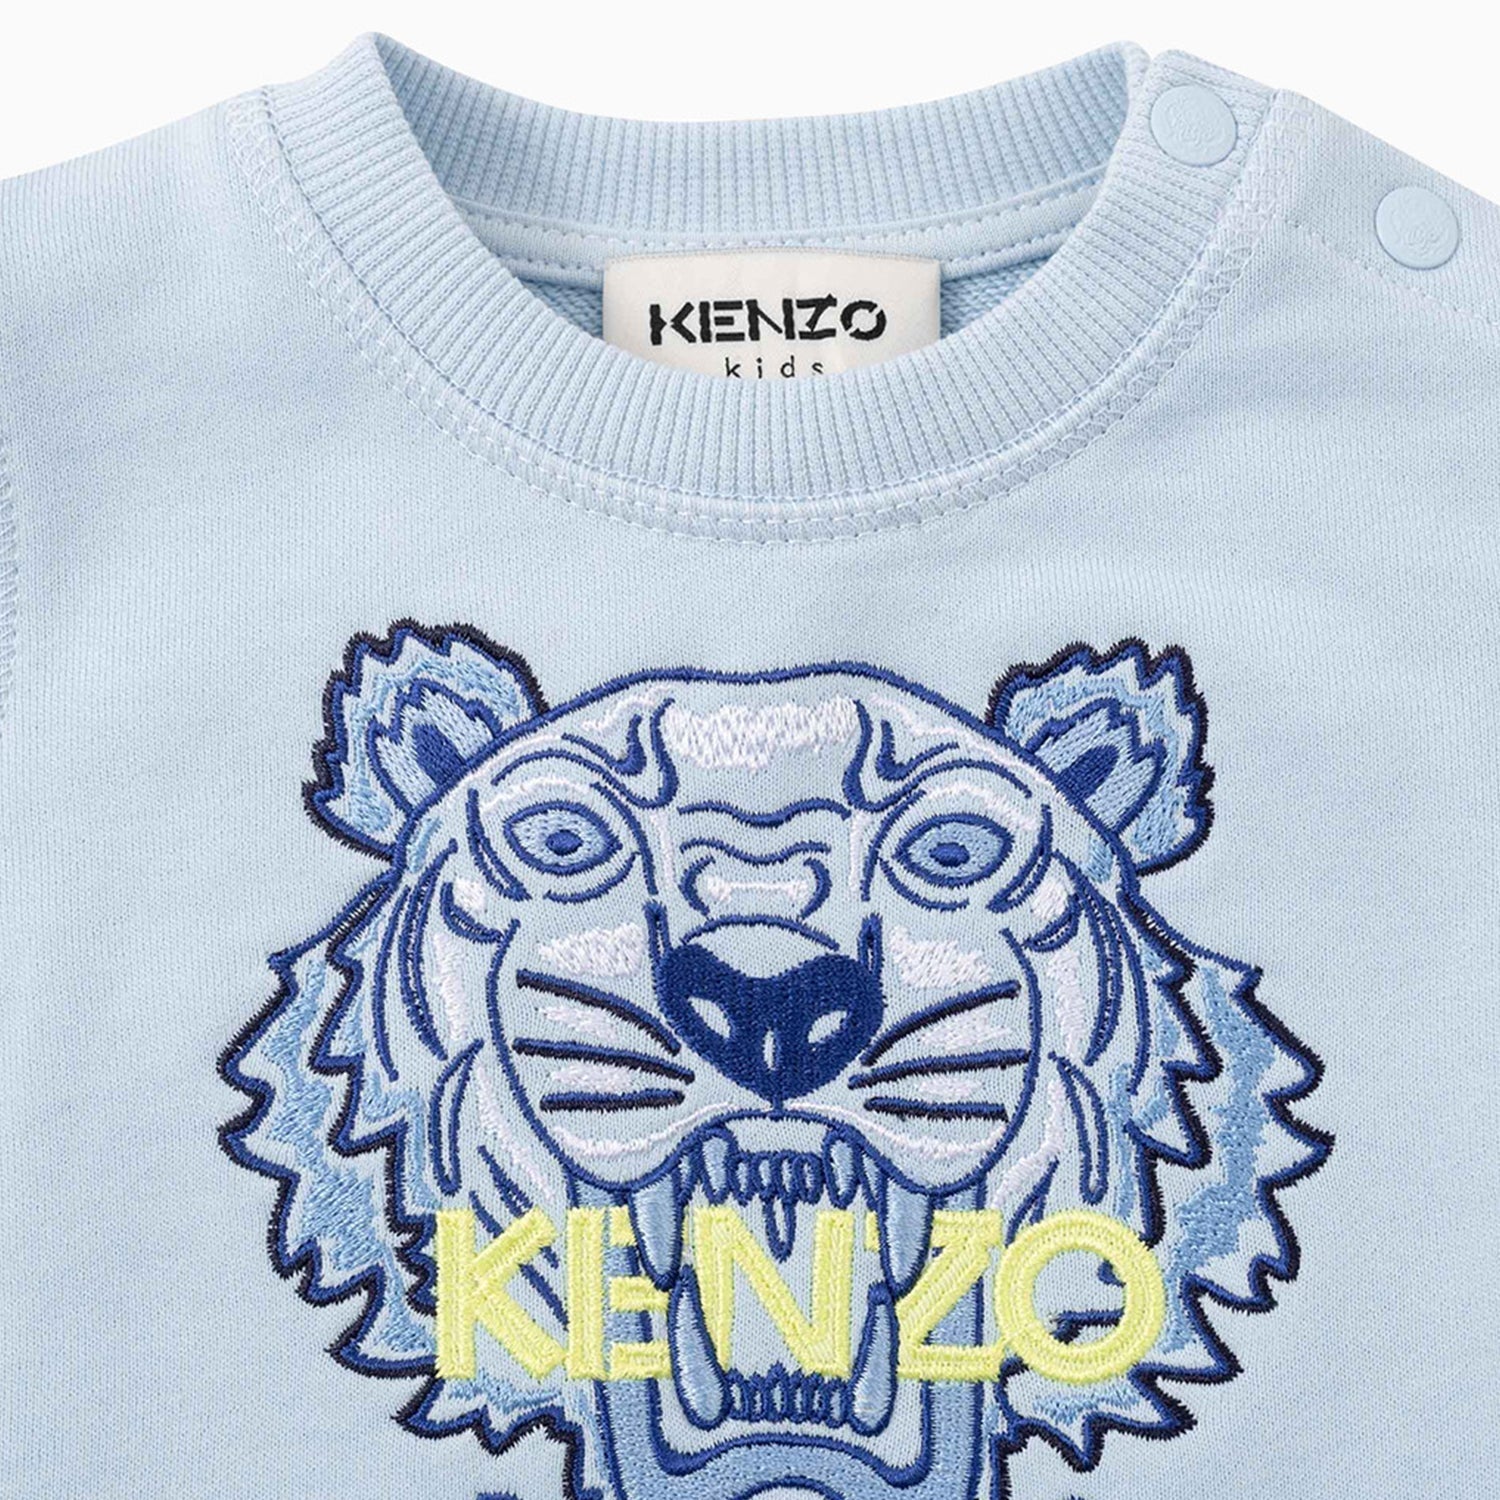 Kenzo Kid's Tiger Sweatshirt - Color: Pale Blue - Kids Premium Clothing -